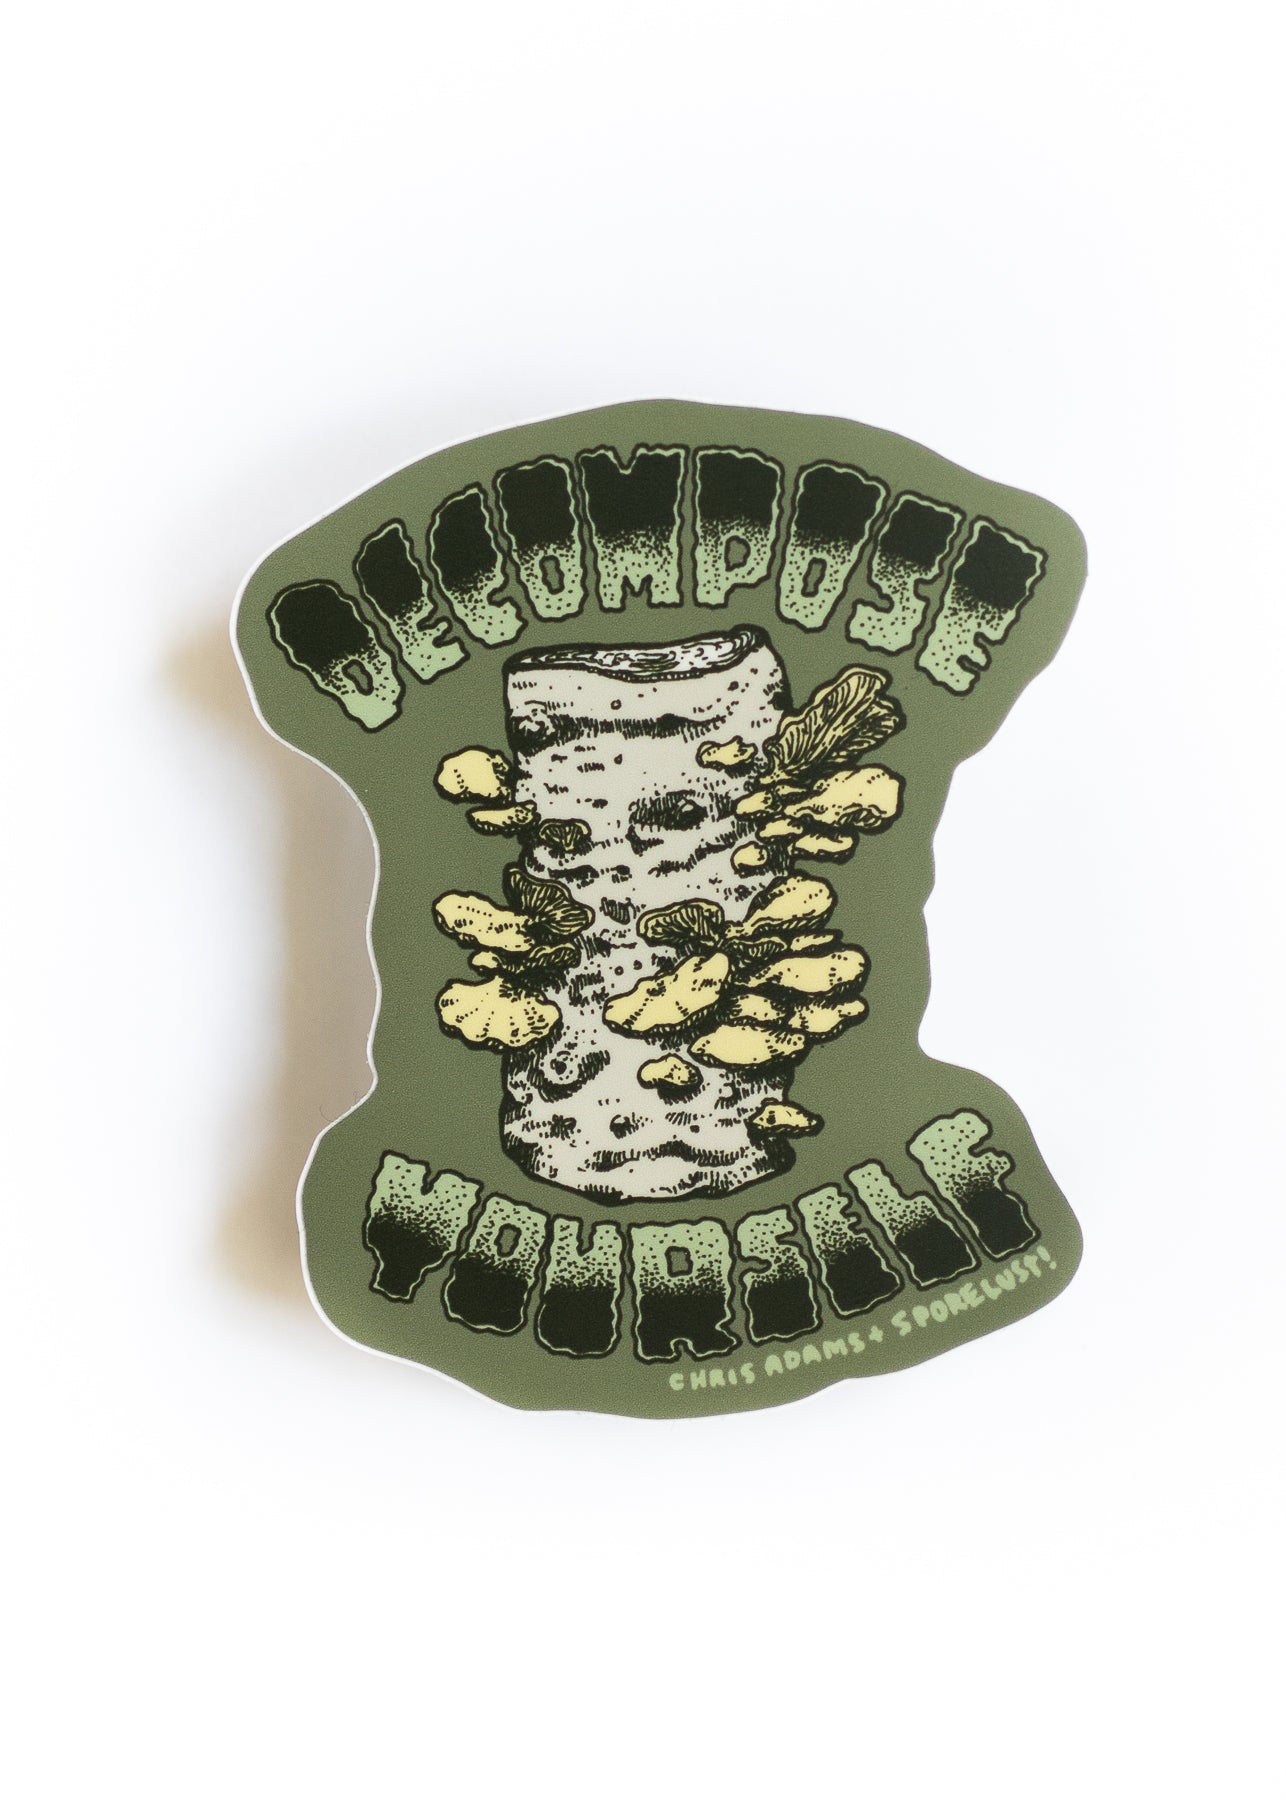 Decompose Yourself Oyster Mushroom Sticker